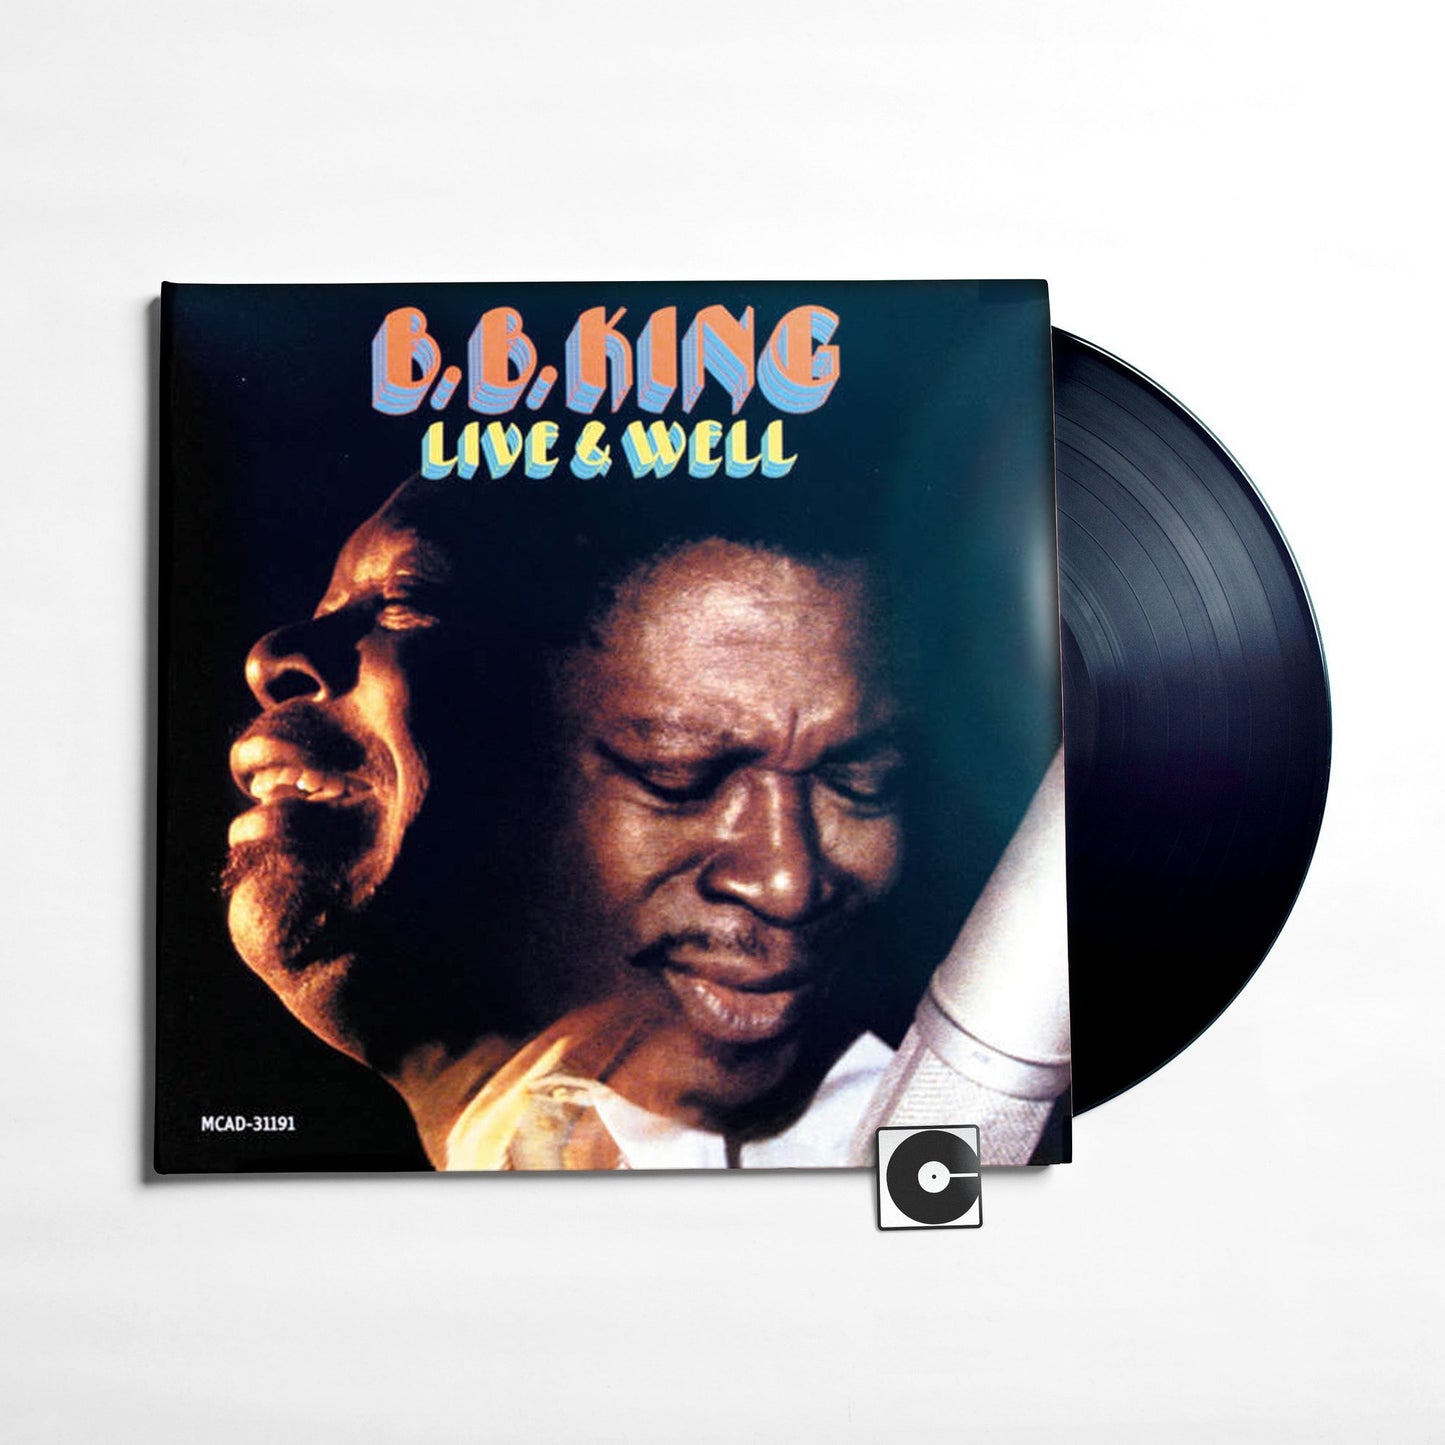 B.B. King - "Live & Well"